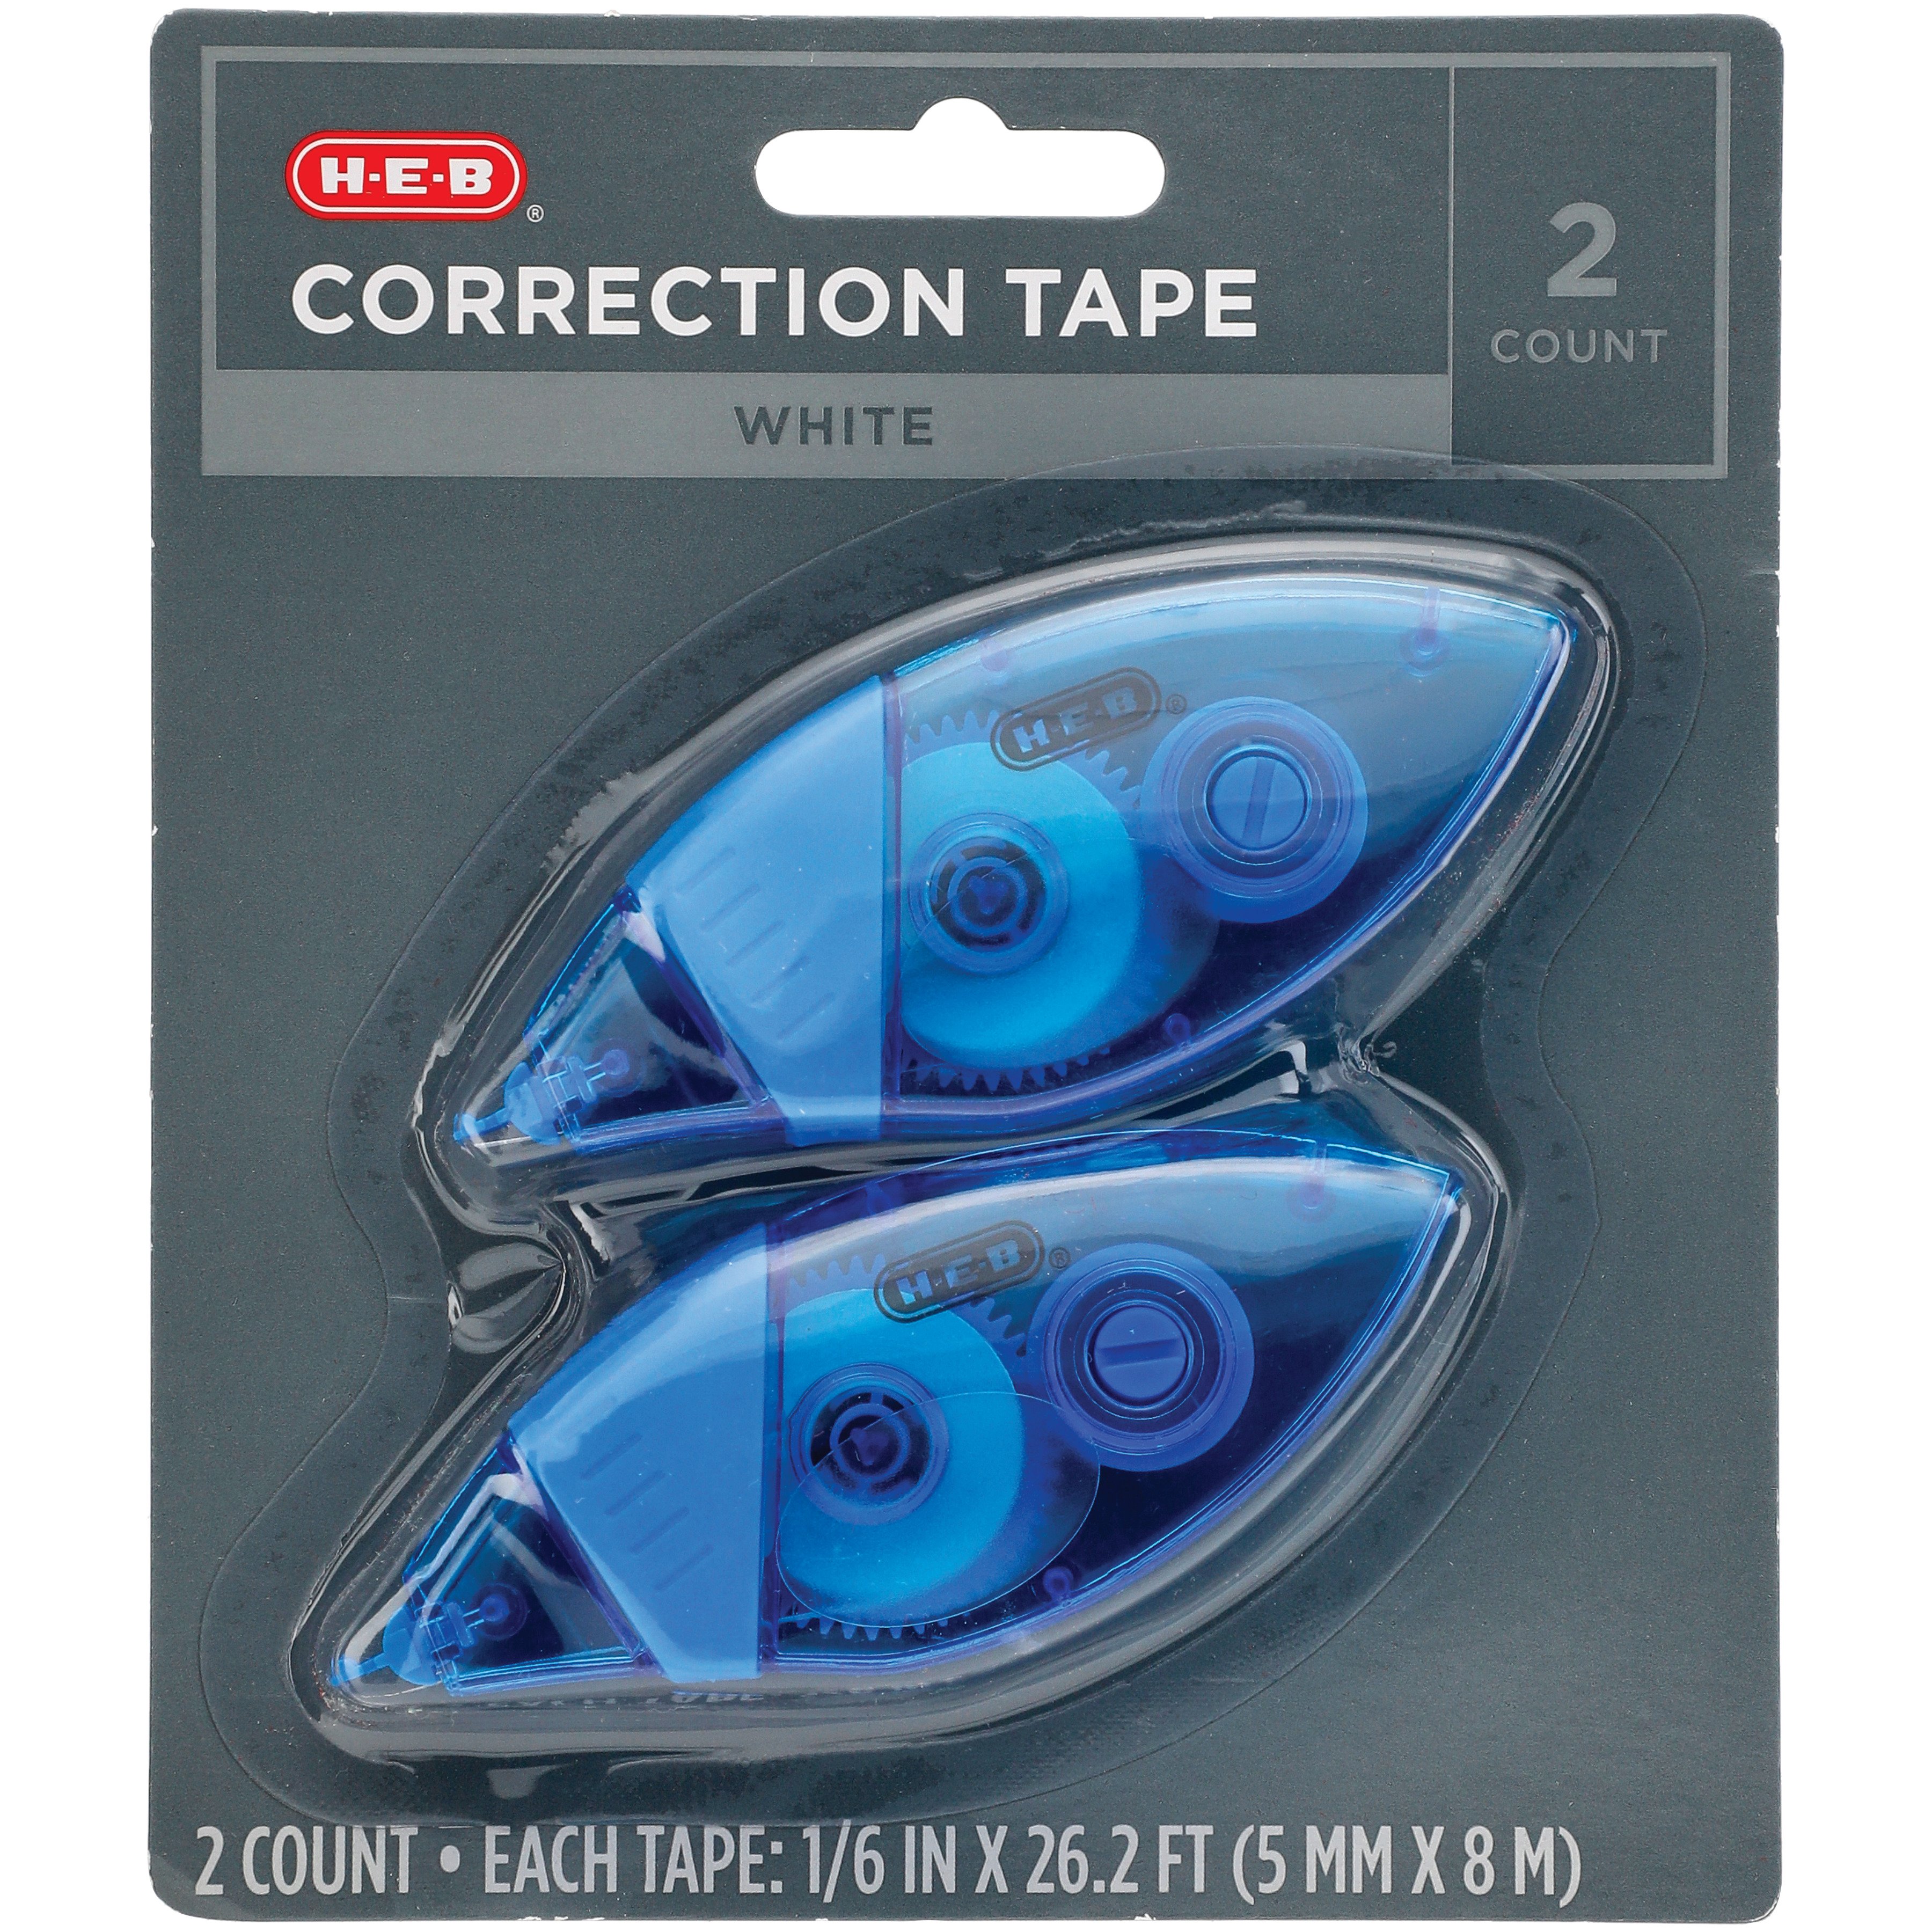 H-E-B Correction Tape - White